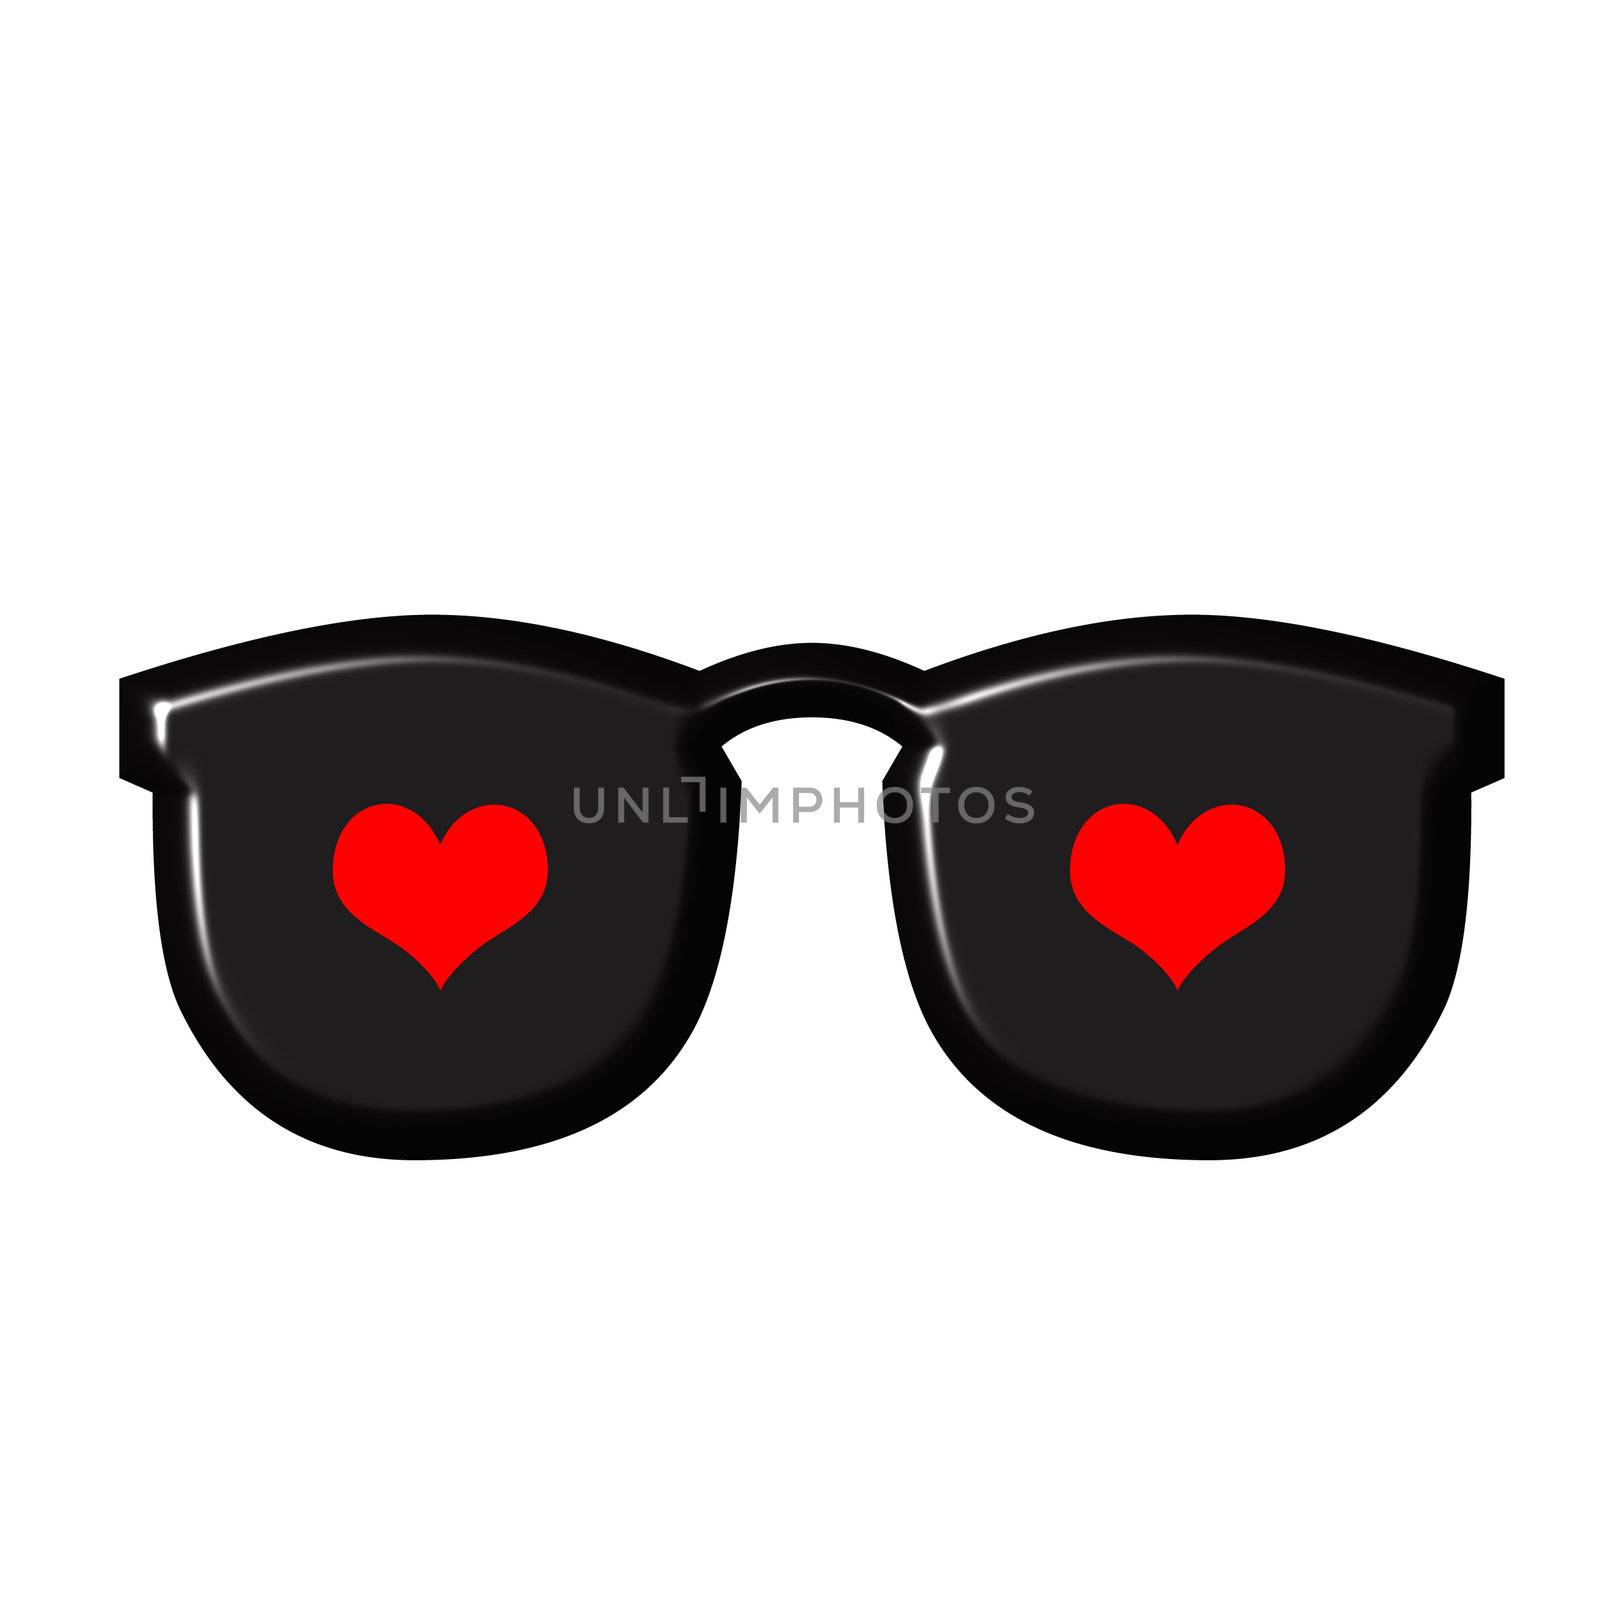 Love reflection on sunglasses